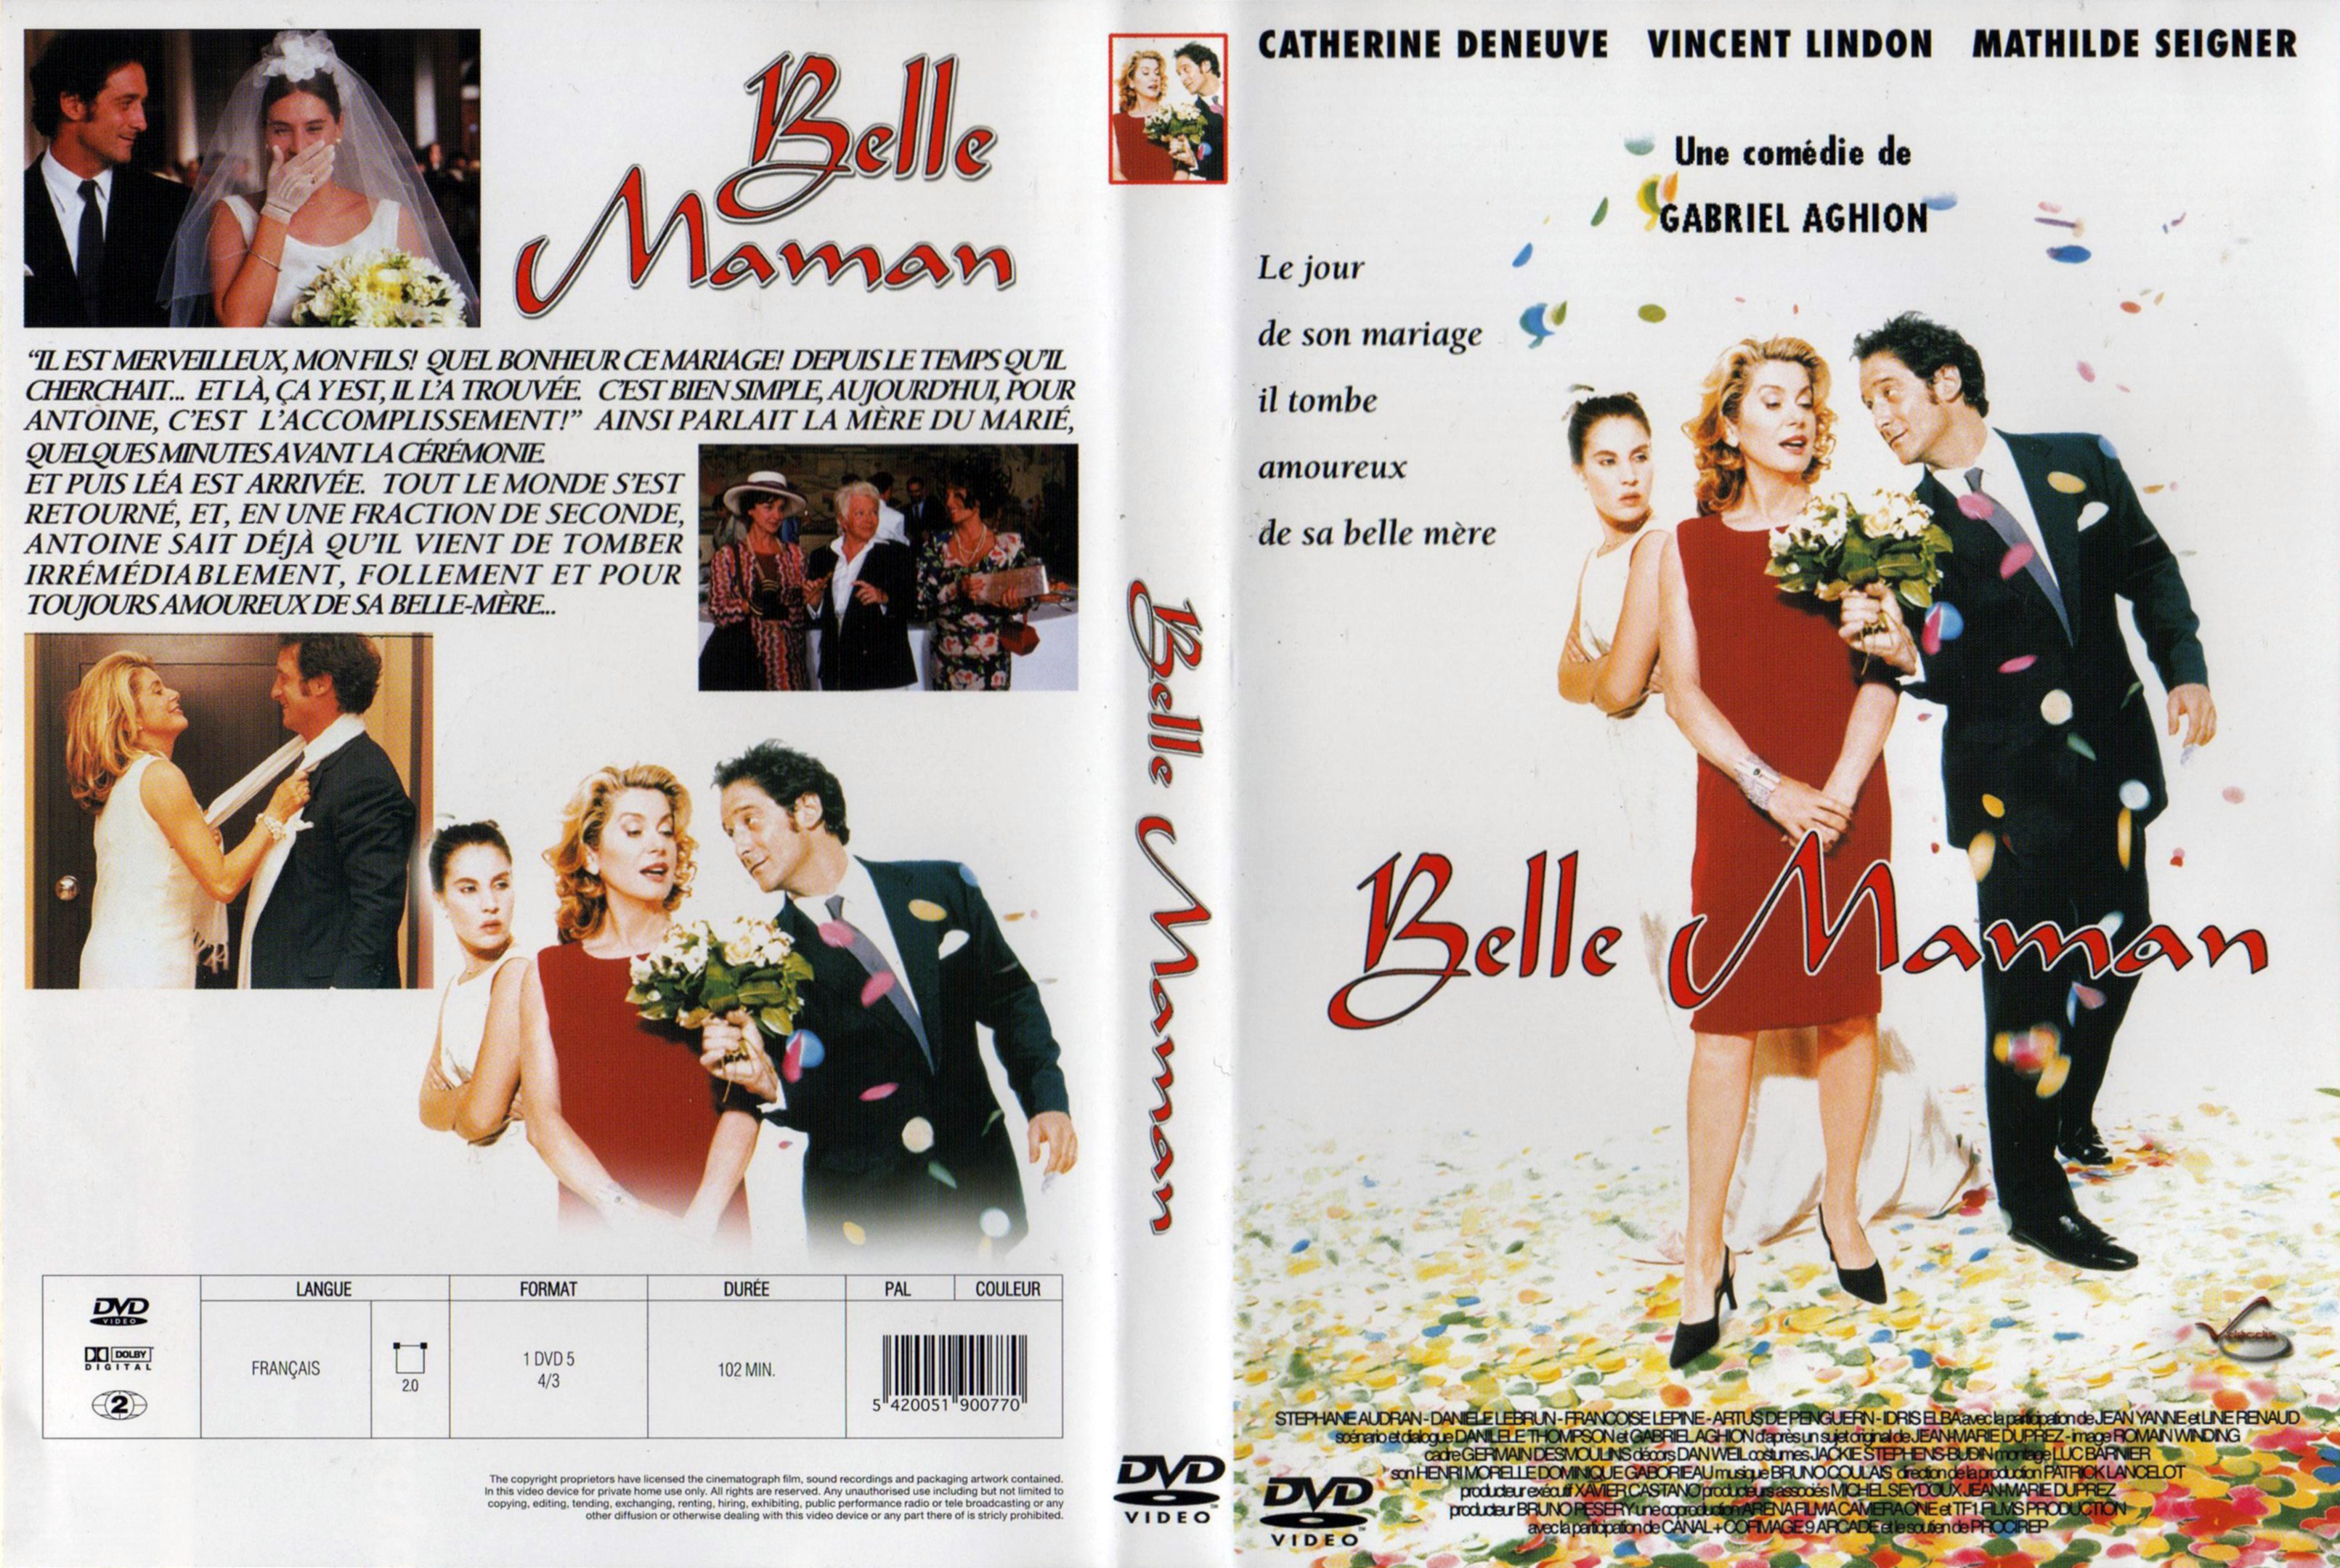 Jaquette DVD Belle Maman v2